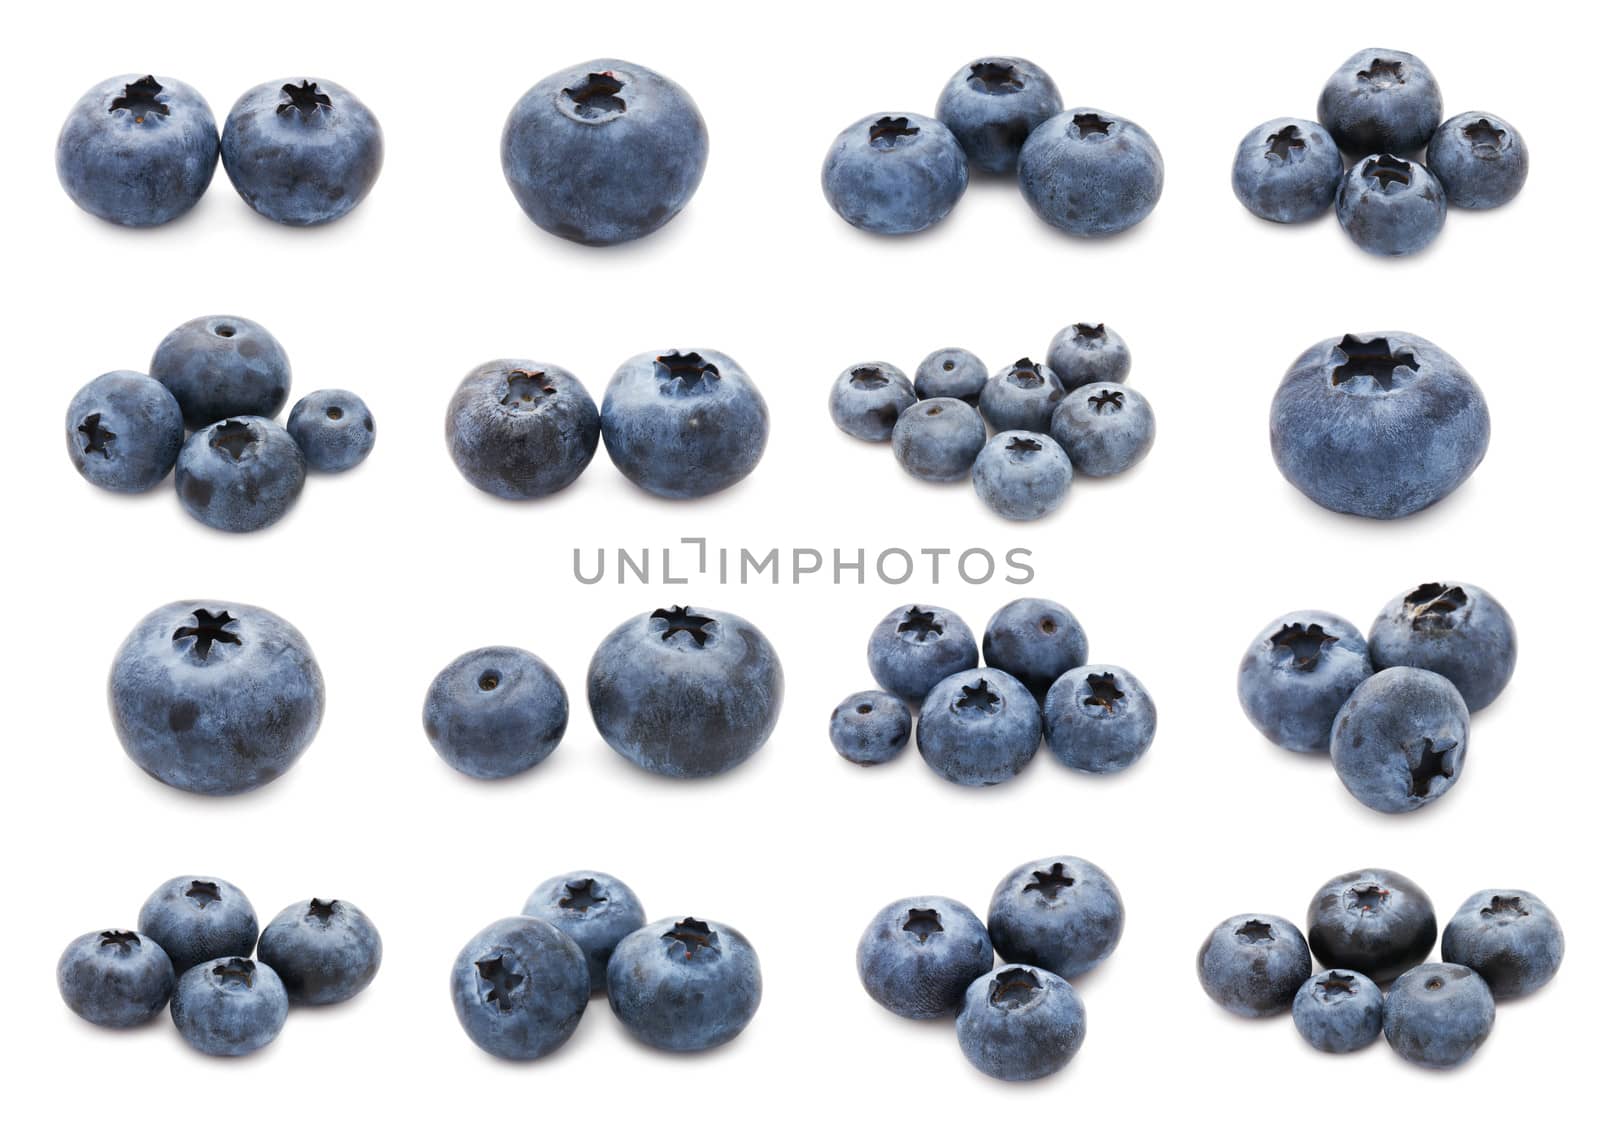 Blueberry set by sailorr